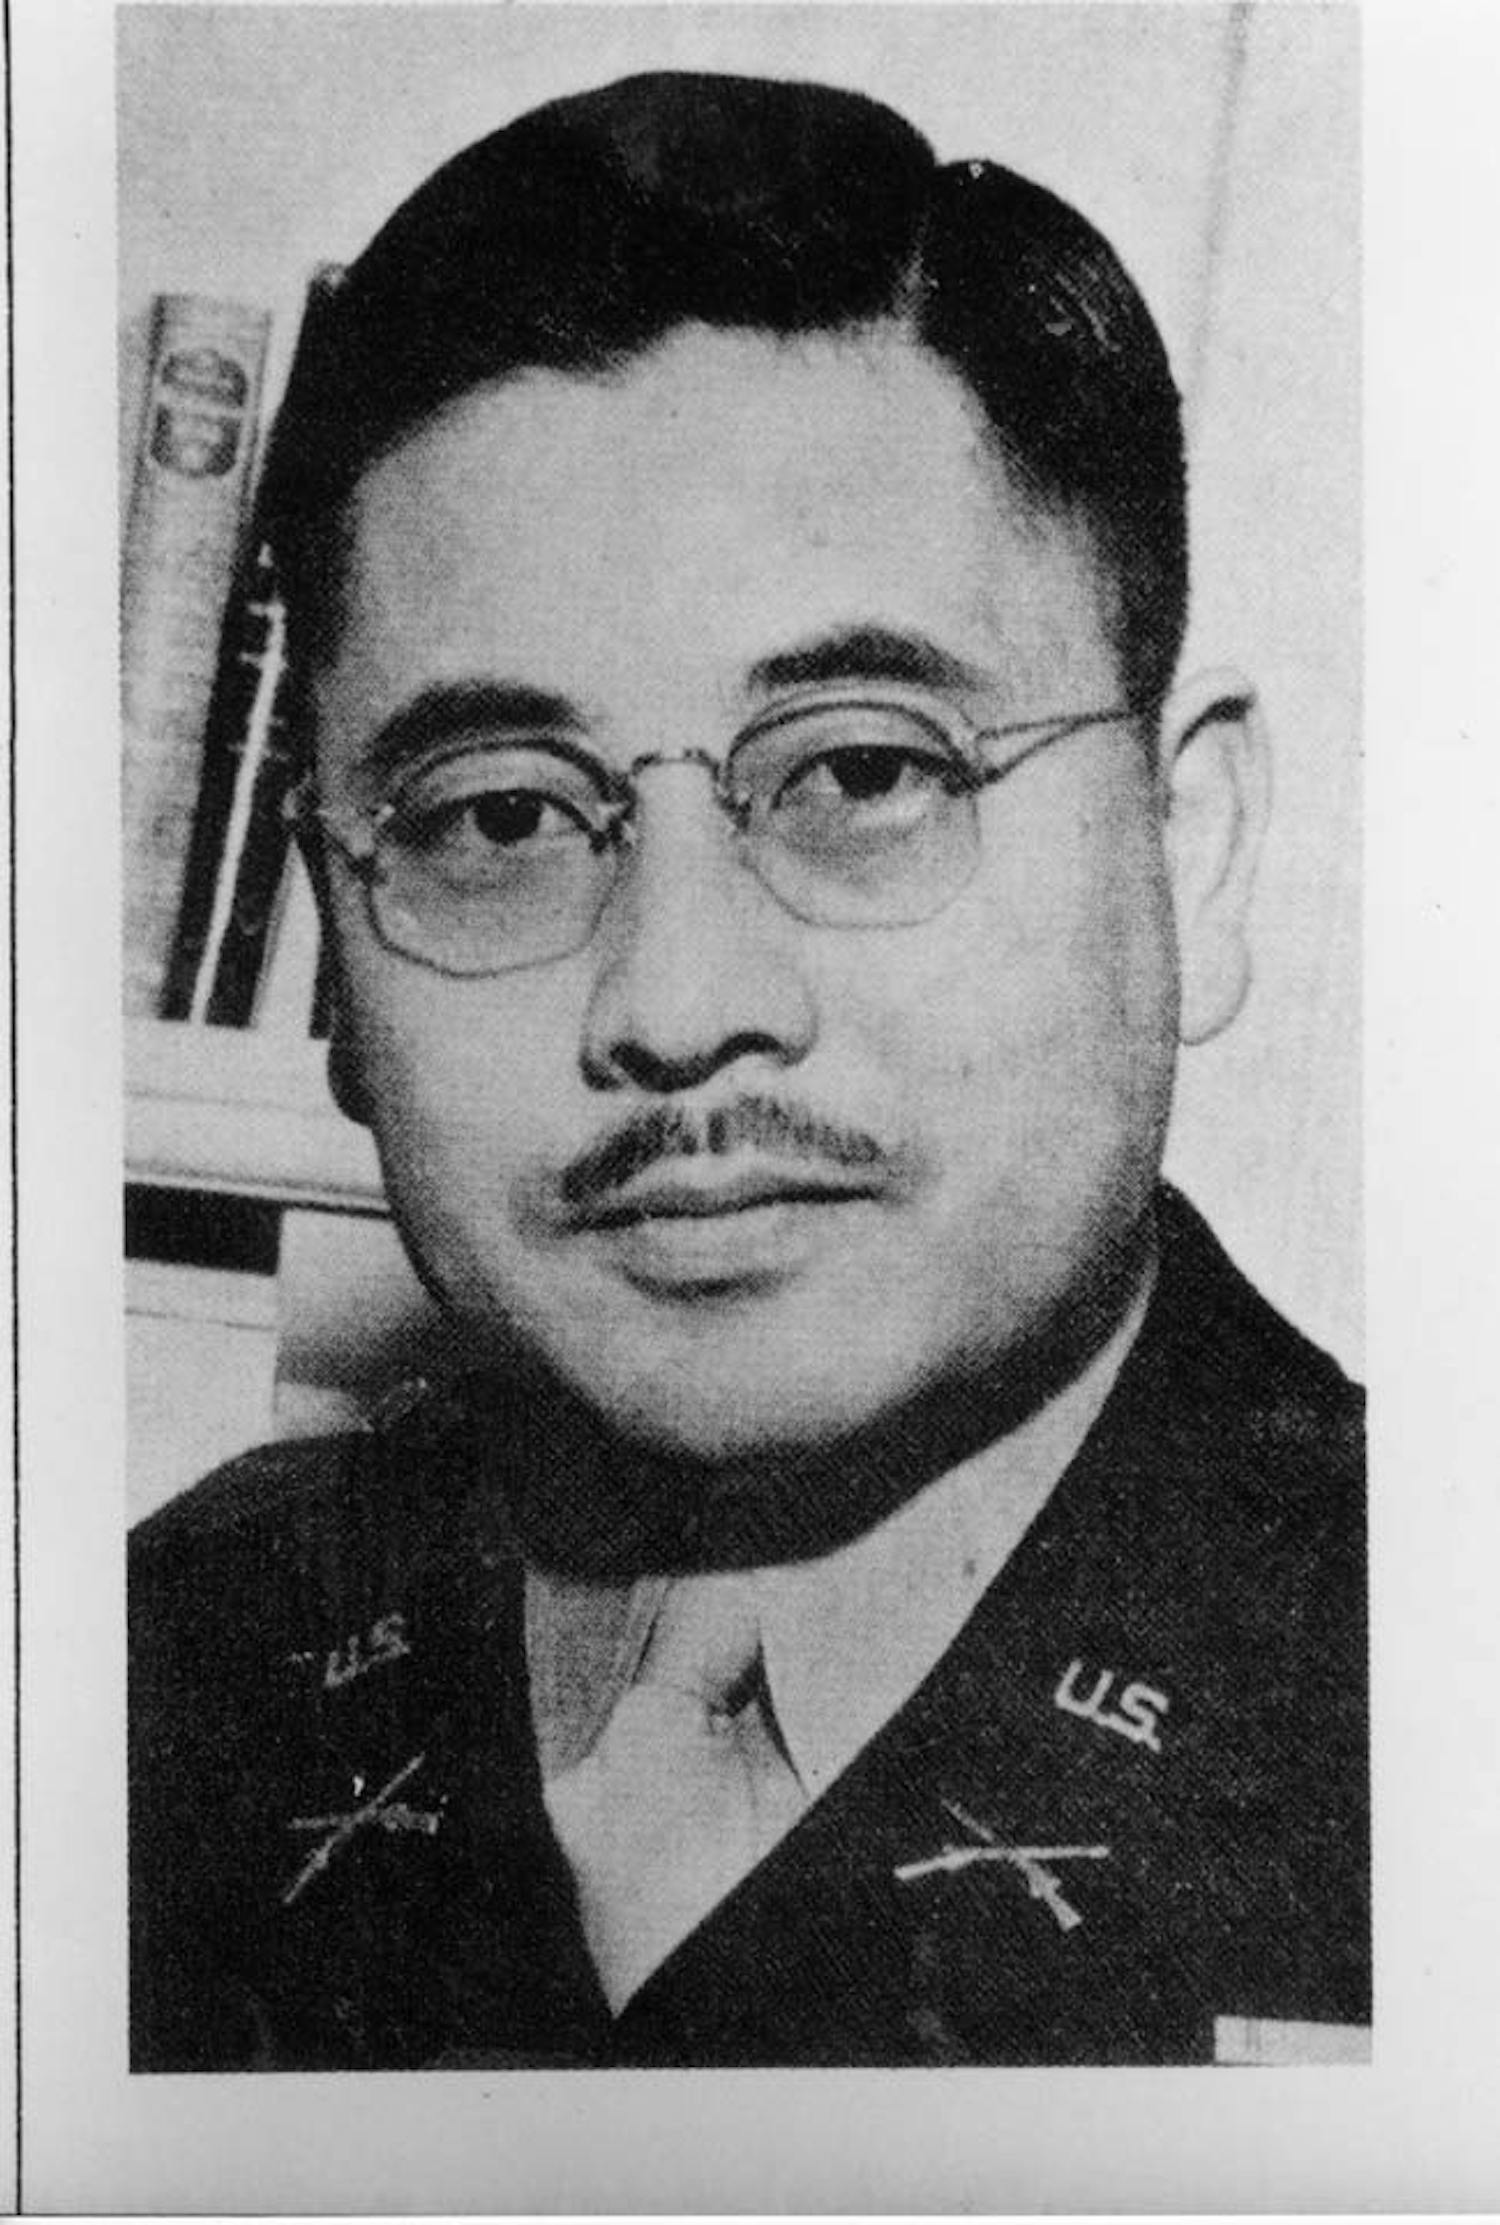 US_Army_photo_of_John_Aiso_in_uniform_c._1941-1945